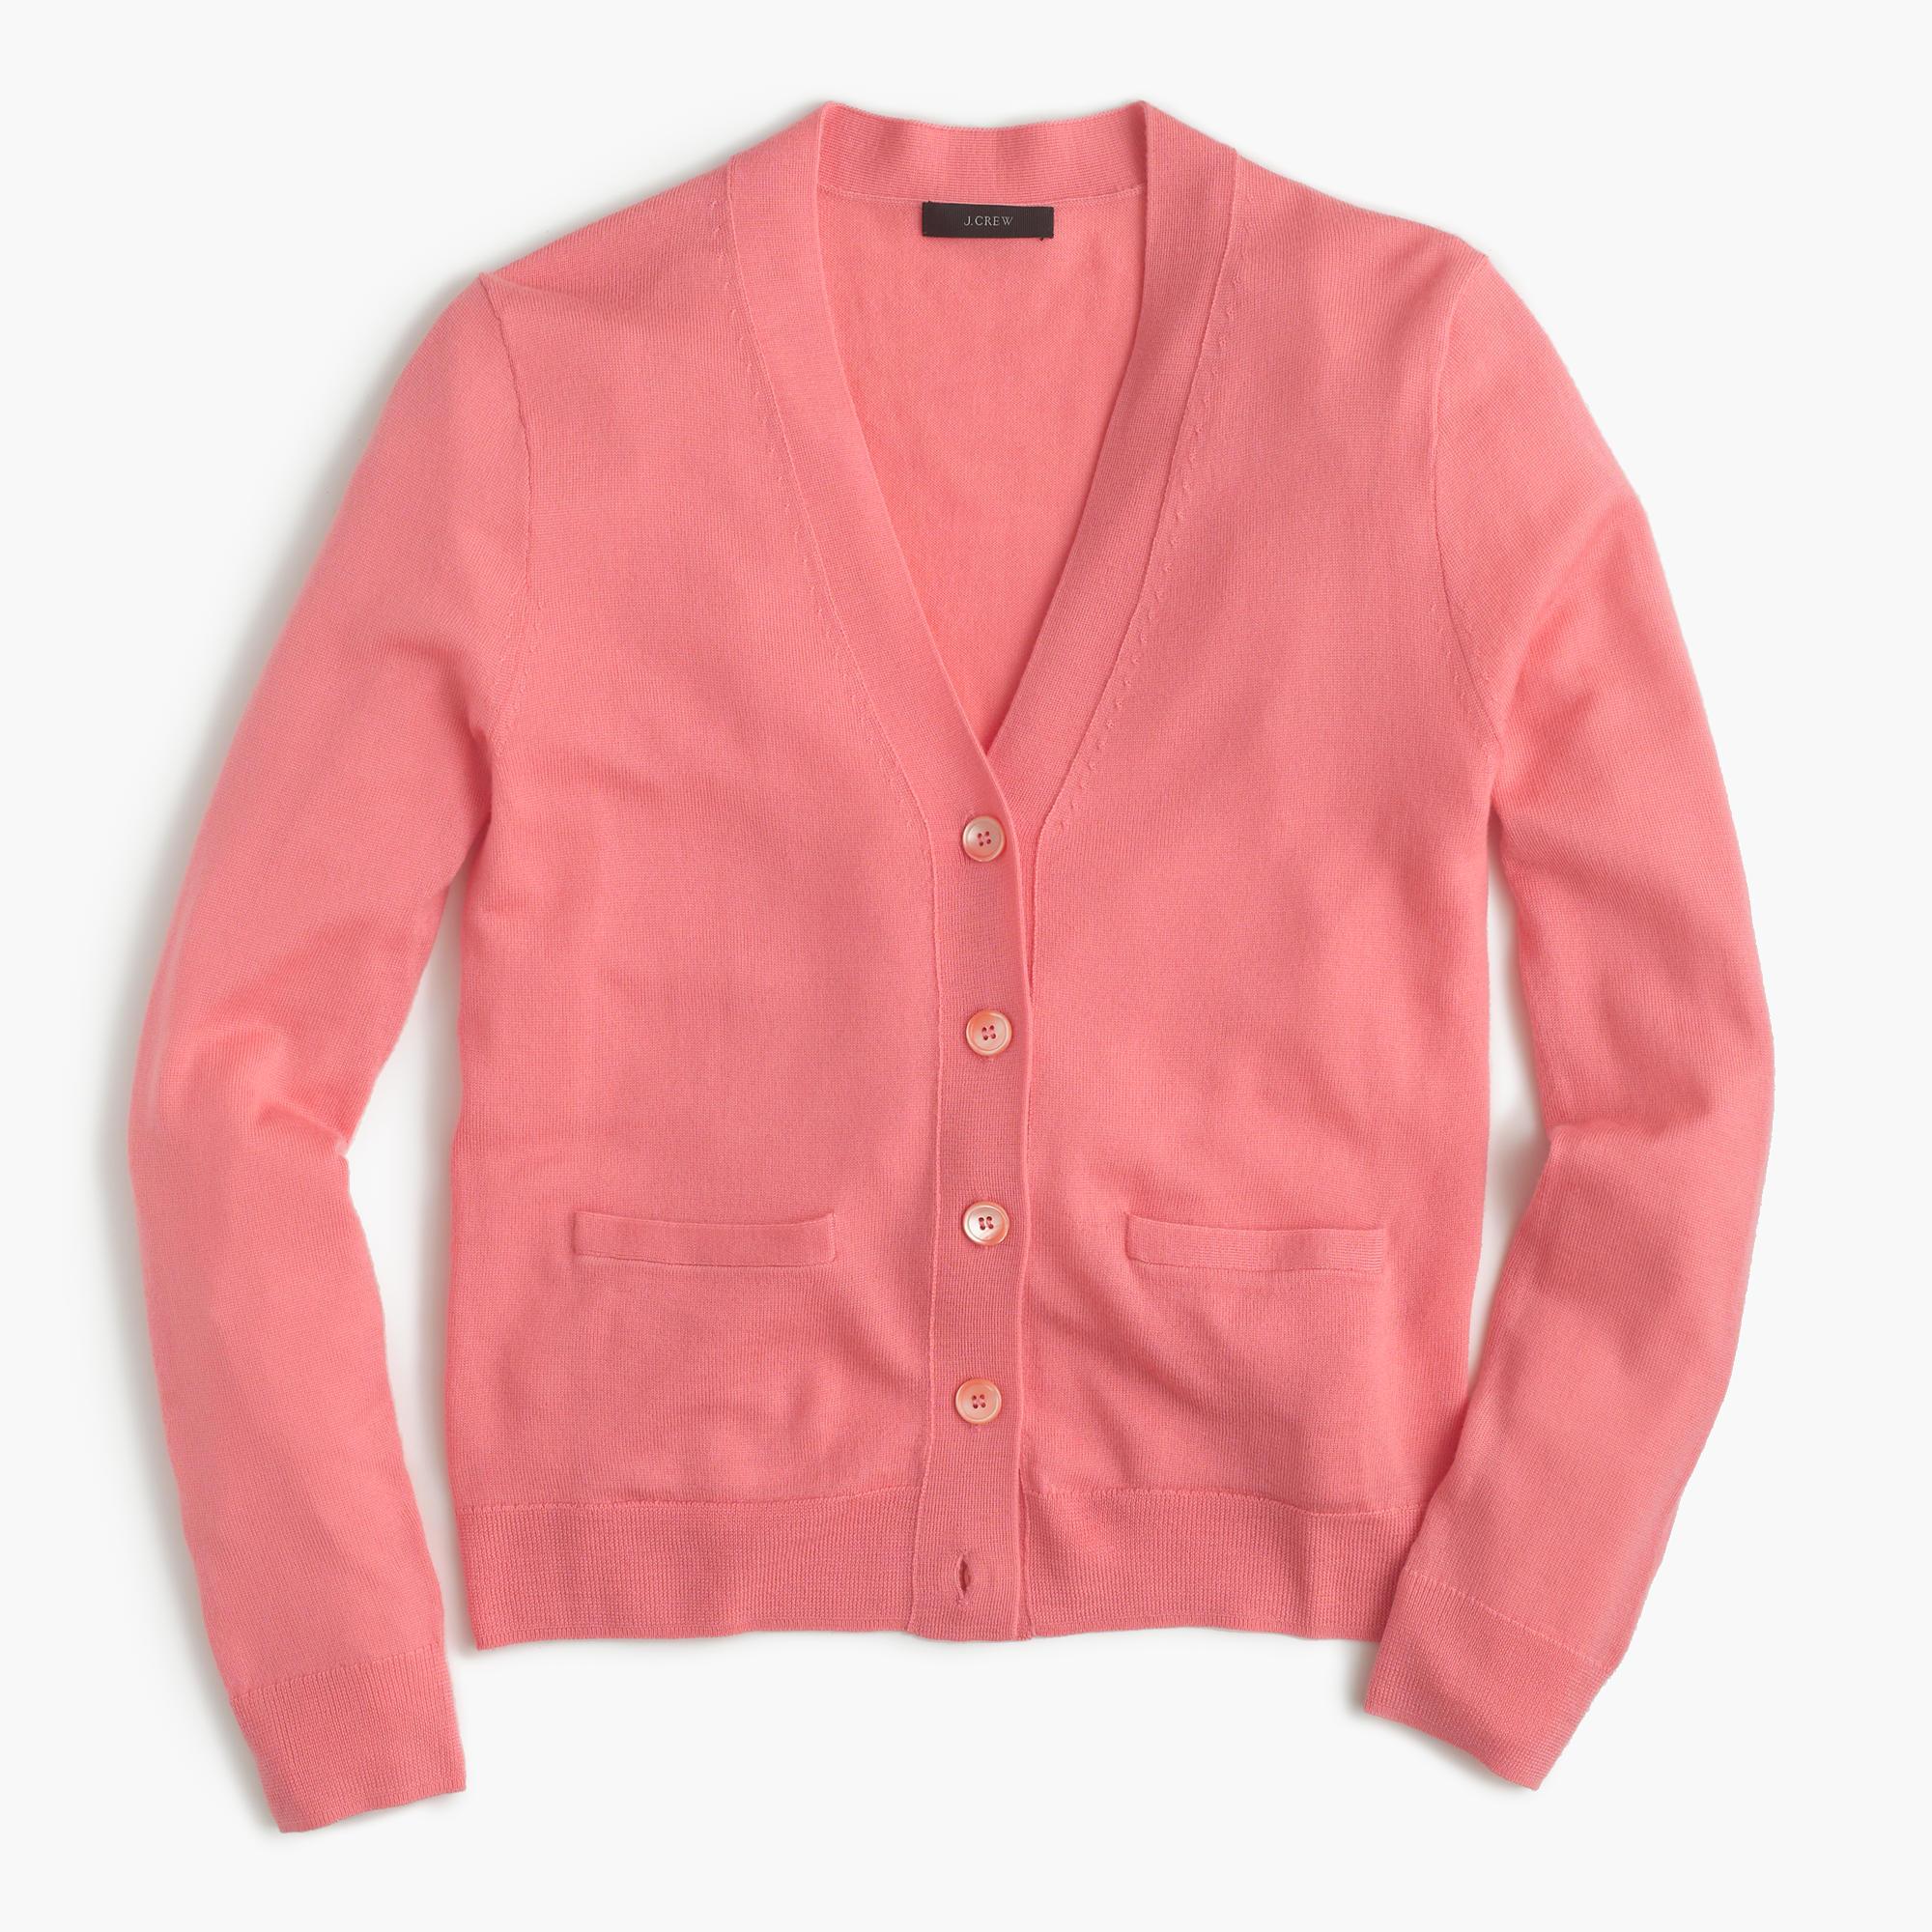 J.crew V-neck Cardigan Sweater In Merino Wool in Pink | Lyst